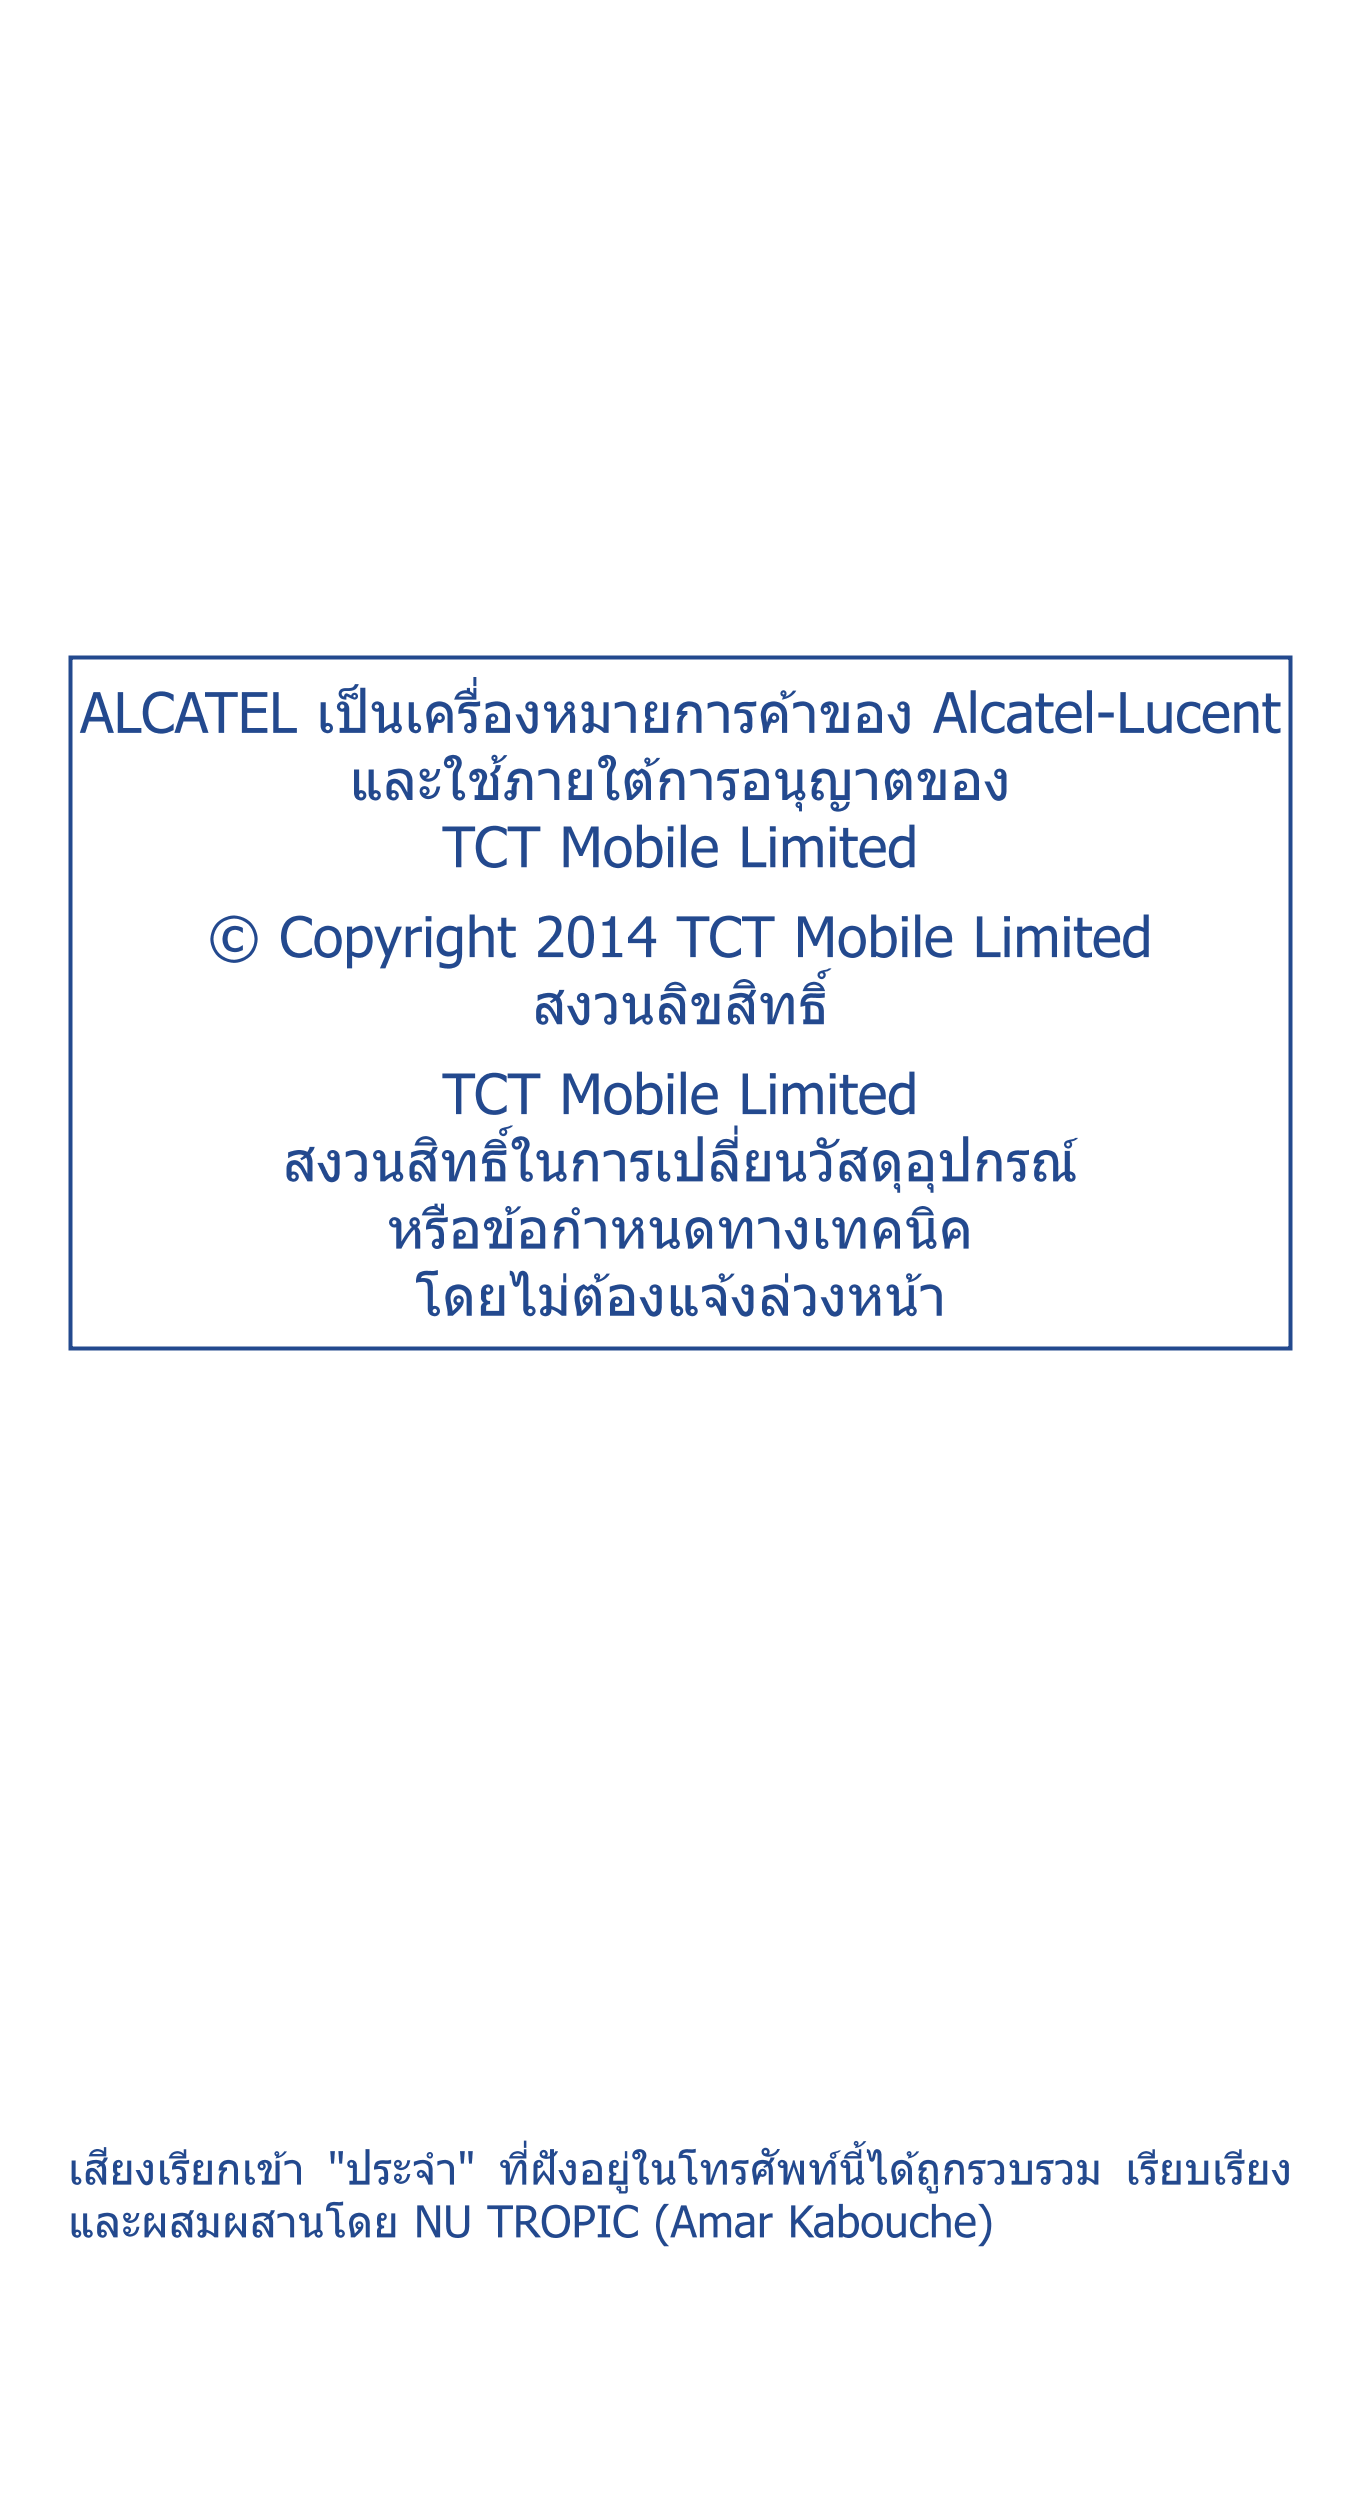 ALCATEL เป็ นเครื่องหมายการค ้าของ Alcatel-Lucent 
และใชภายใต ้การอนุญาตของ  ้
TCT Mobile Limited
© Copyright 2014 TCT Mobile Li